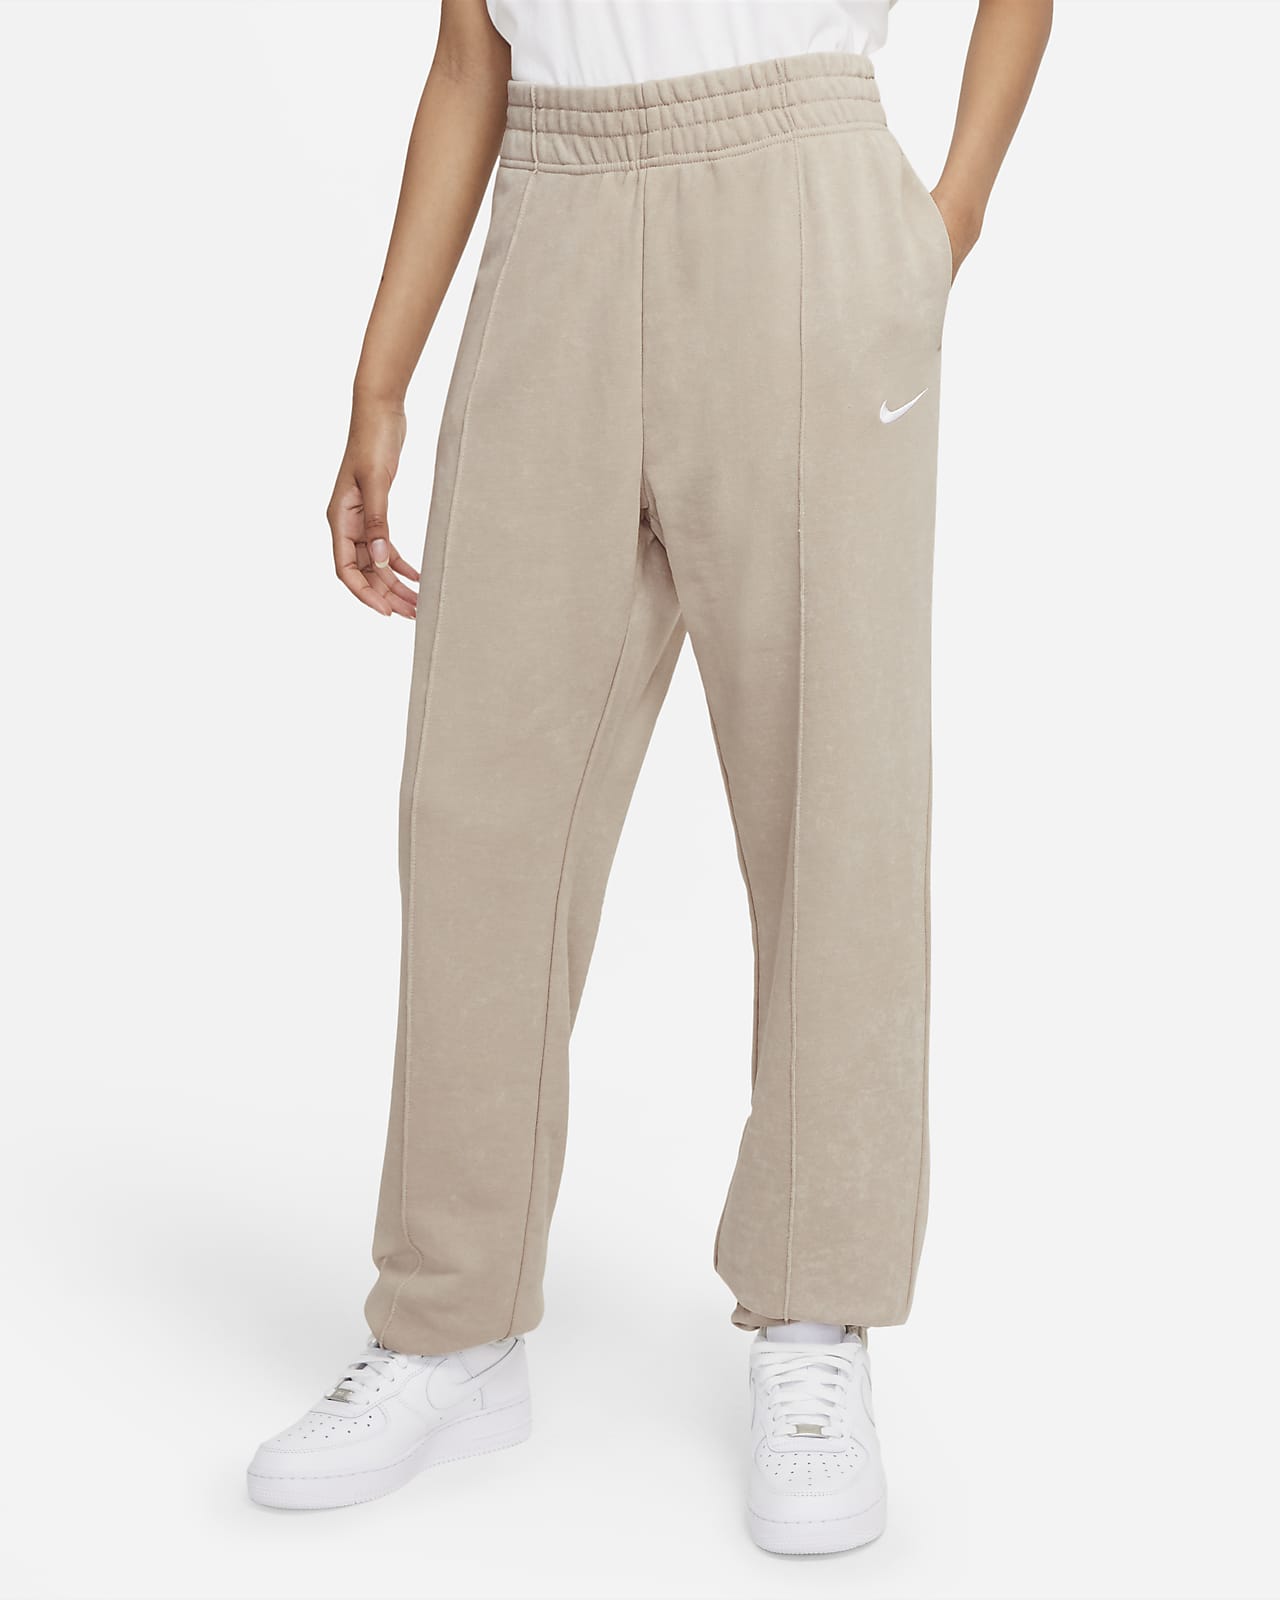 Nike Sportswear Essential Collection Women's Washed Fleece Trousers